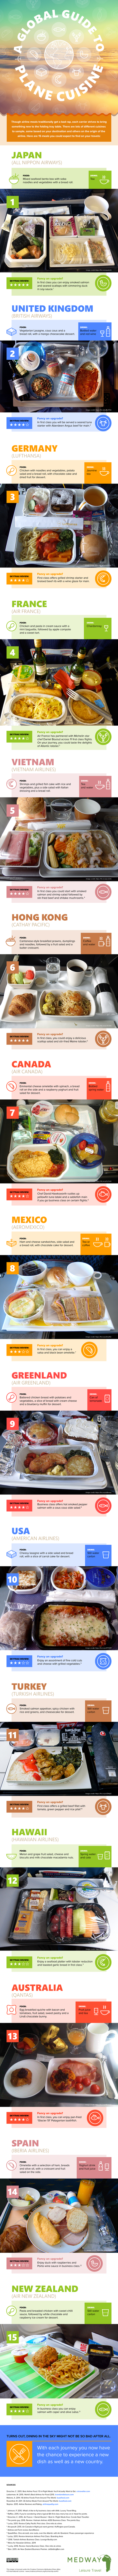 a-plane-guide-to-plane-cuisine